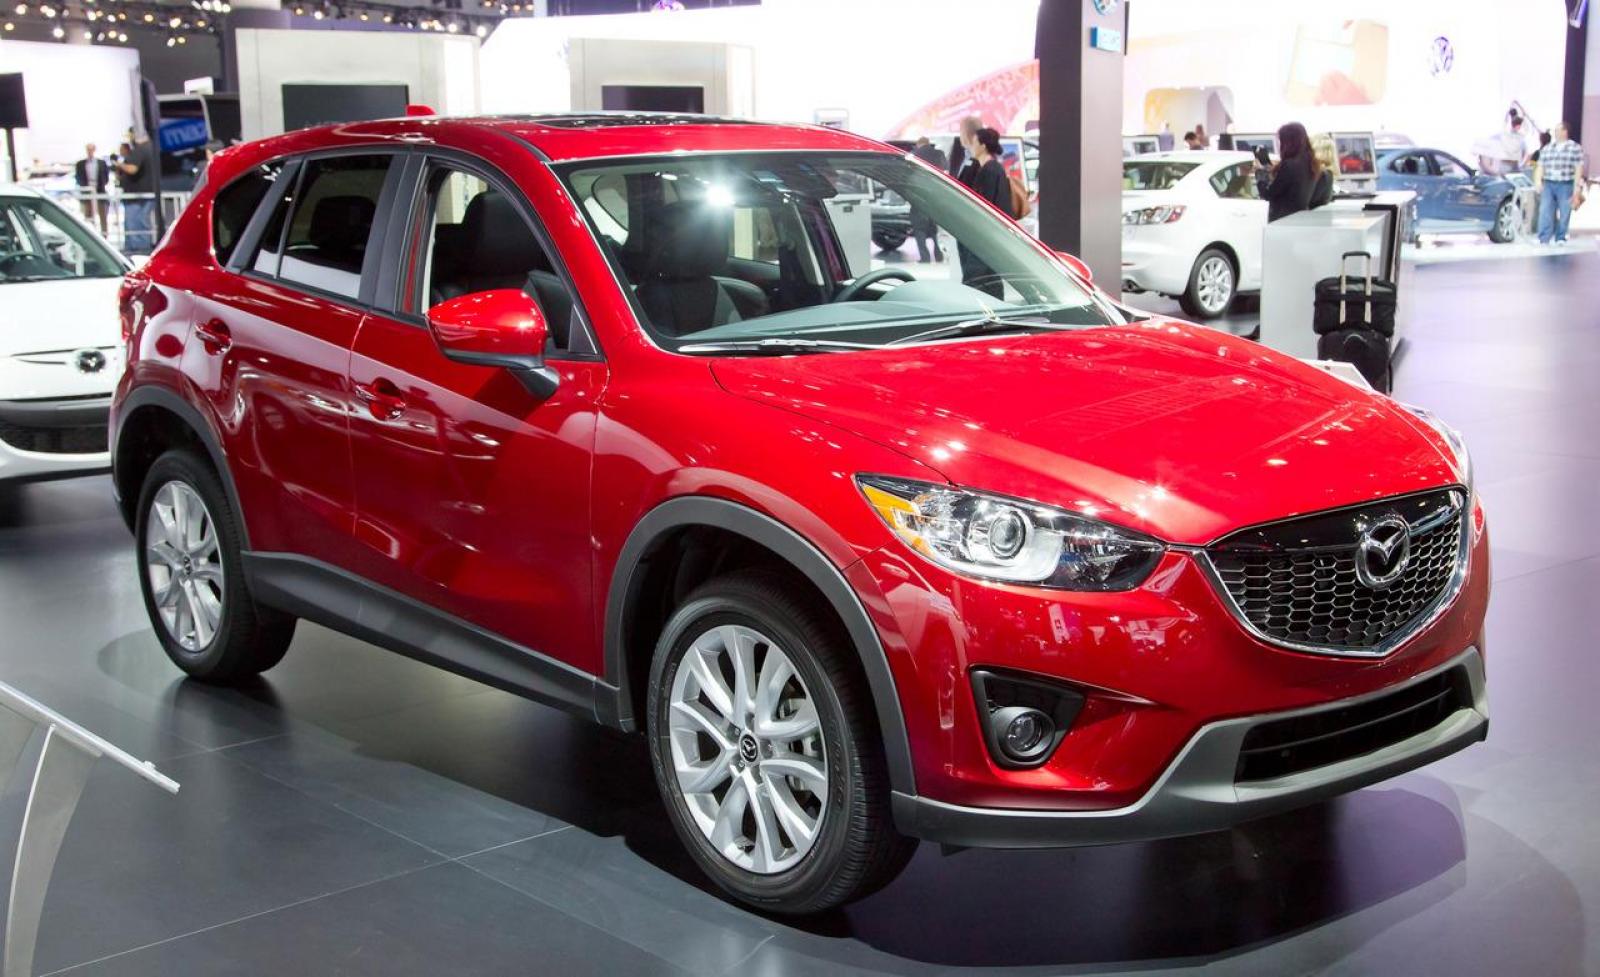 Продажа мазда сх. Mazda CX 5 красная 2014. Мазда СХ-5 2014 красный. Машина Мазда СХ-5 красный. Мазда cx5 красная.